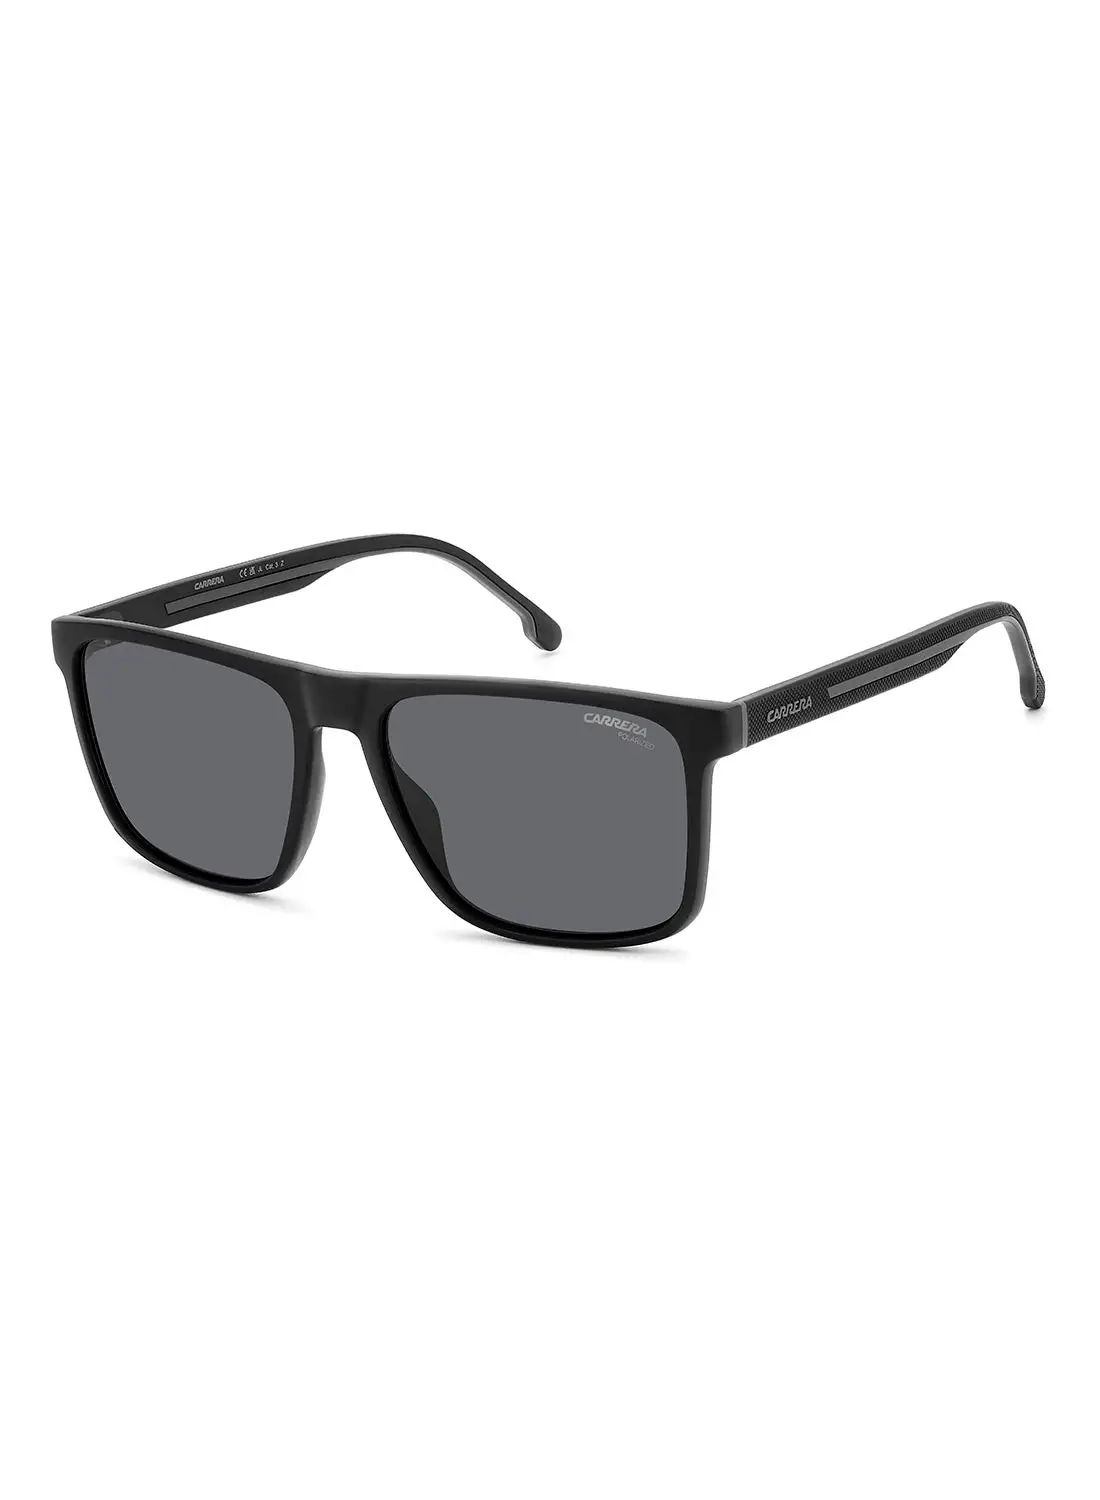 Carrera Men's Polarized Rectangular Sunglasses - Carrera 8064/S Black Millimeter - Lens Size: 57 Mm